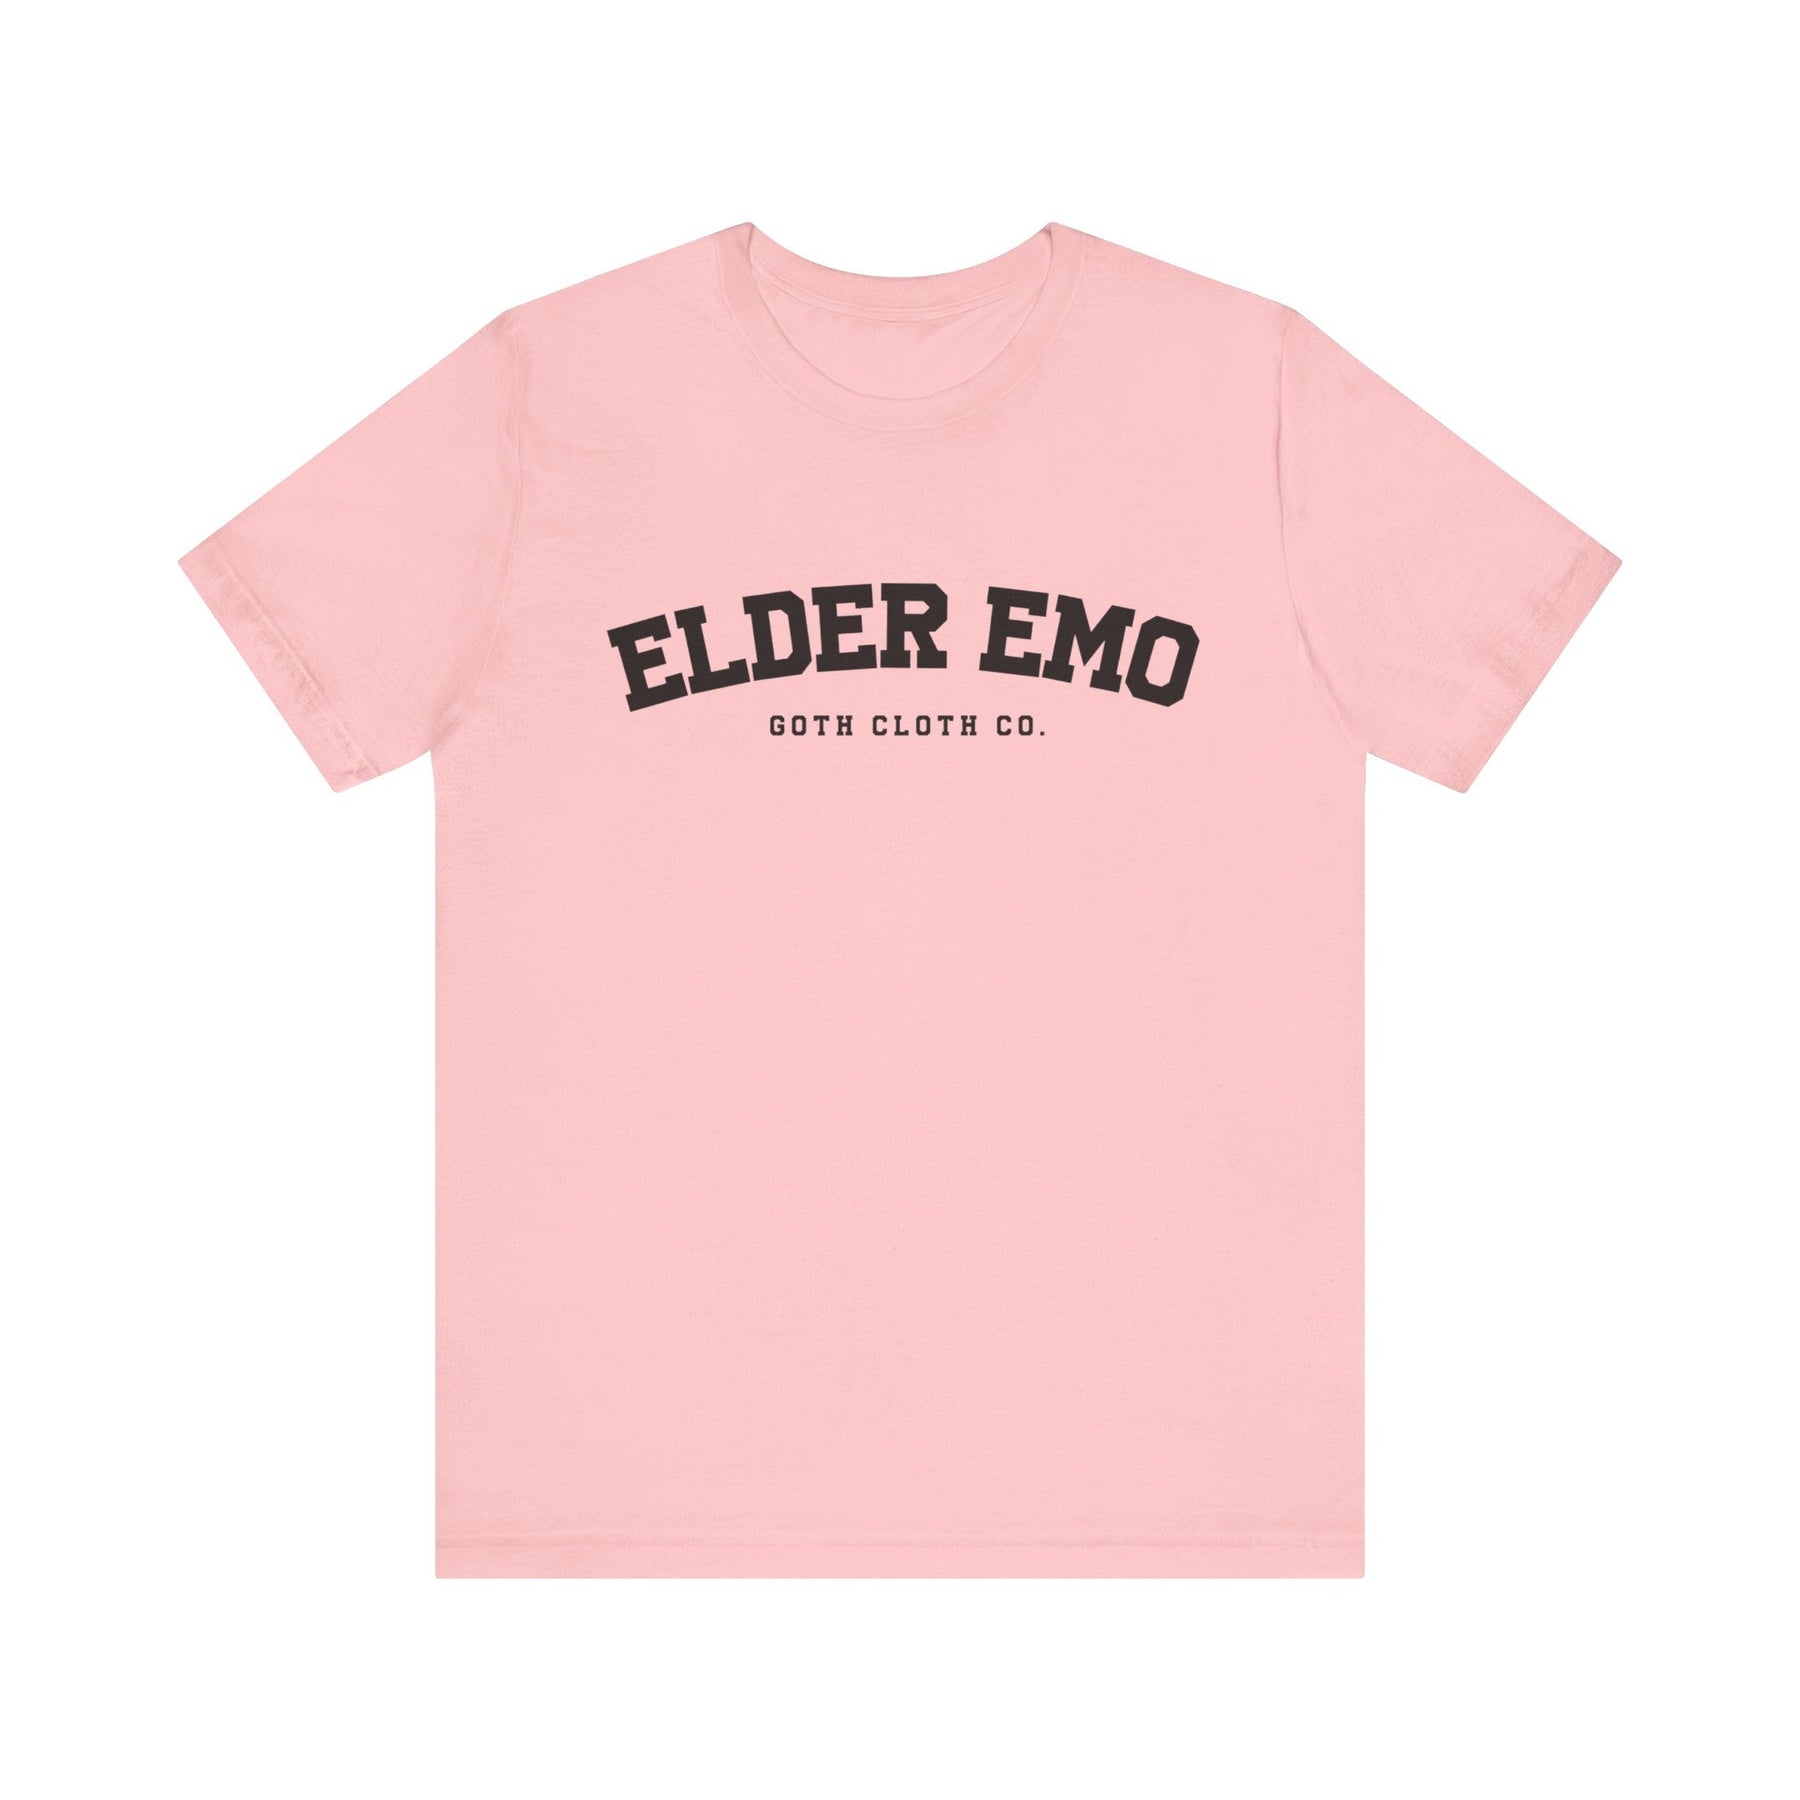 Elder Emo Short Sleeve Tee - Goth Cloth Co.T - Shirt32580543223542801028